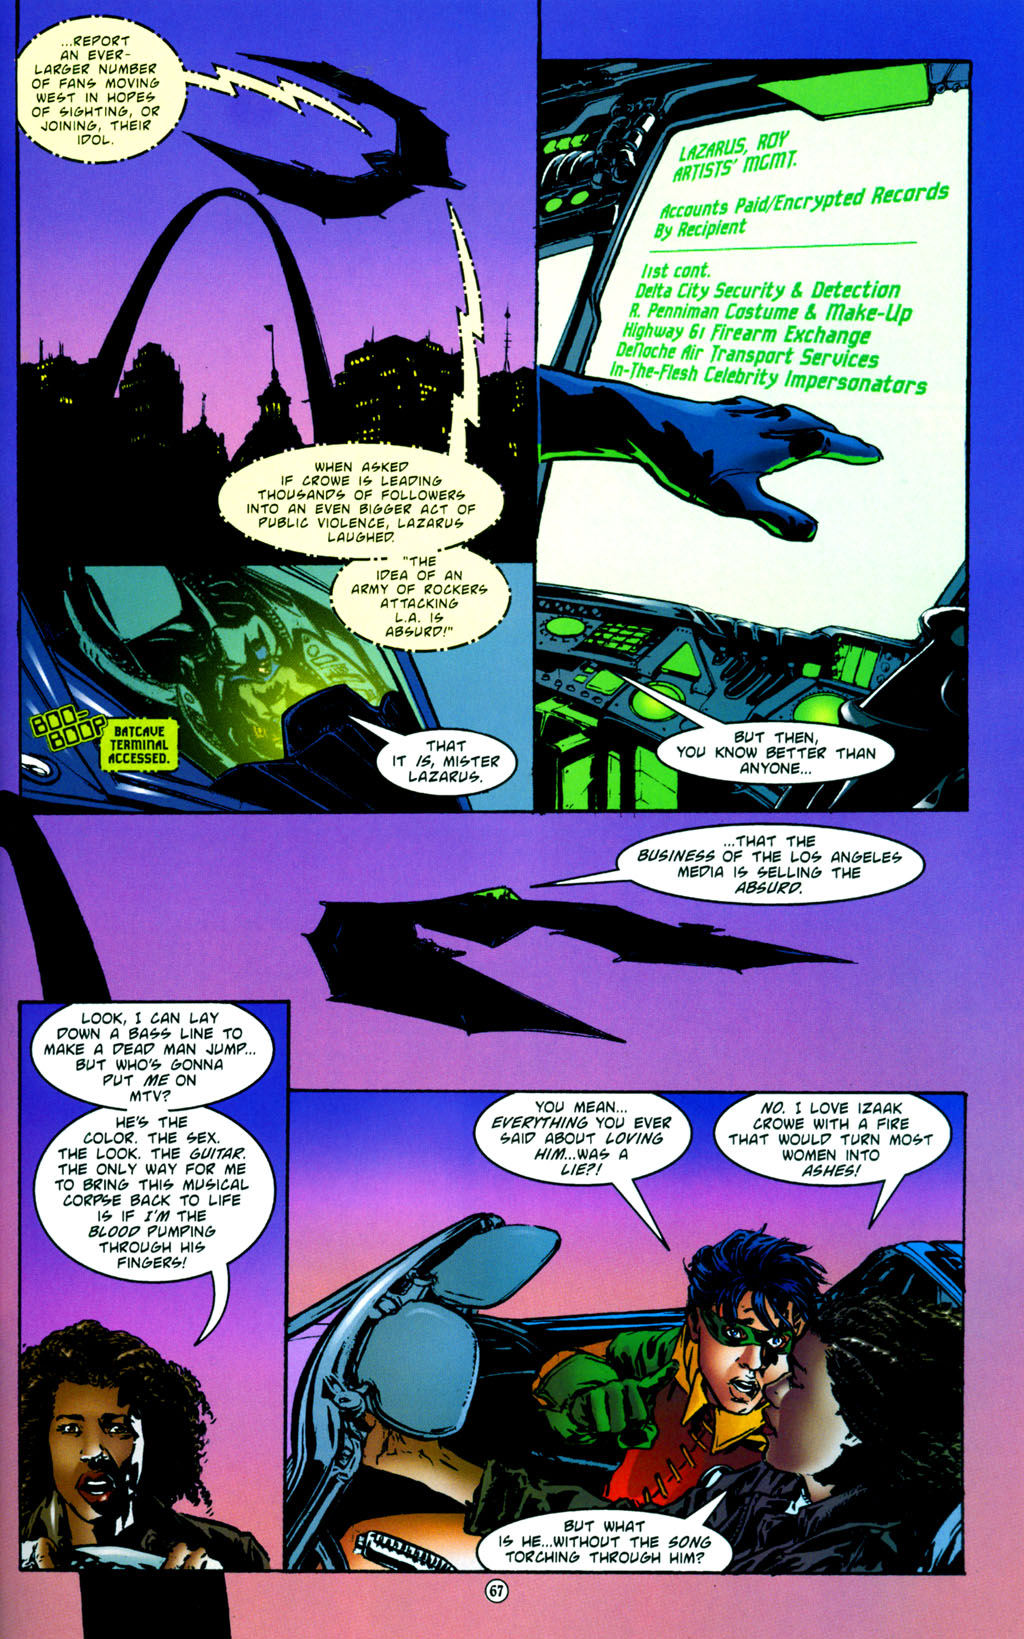 ZONA FRANCA COMICS: BATMAN FORTUNATE SON - DC GRAPHIC NOVEL